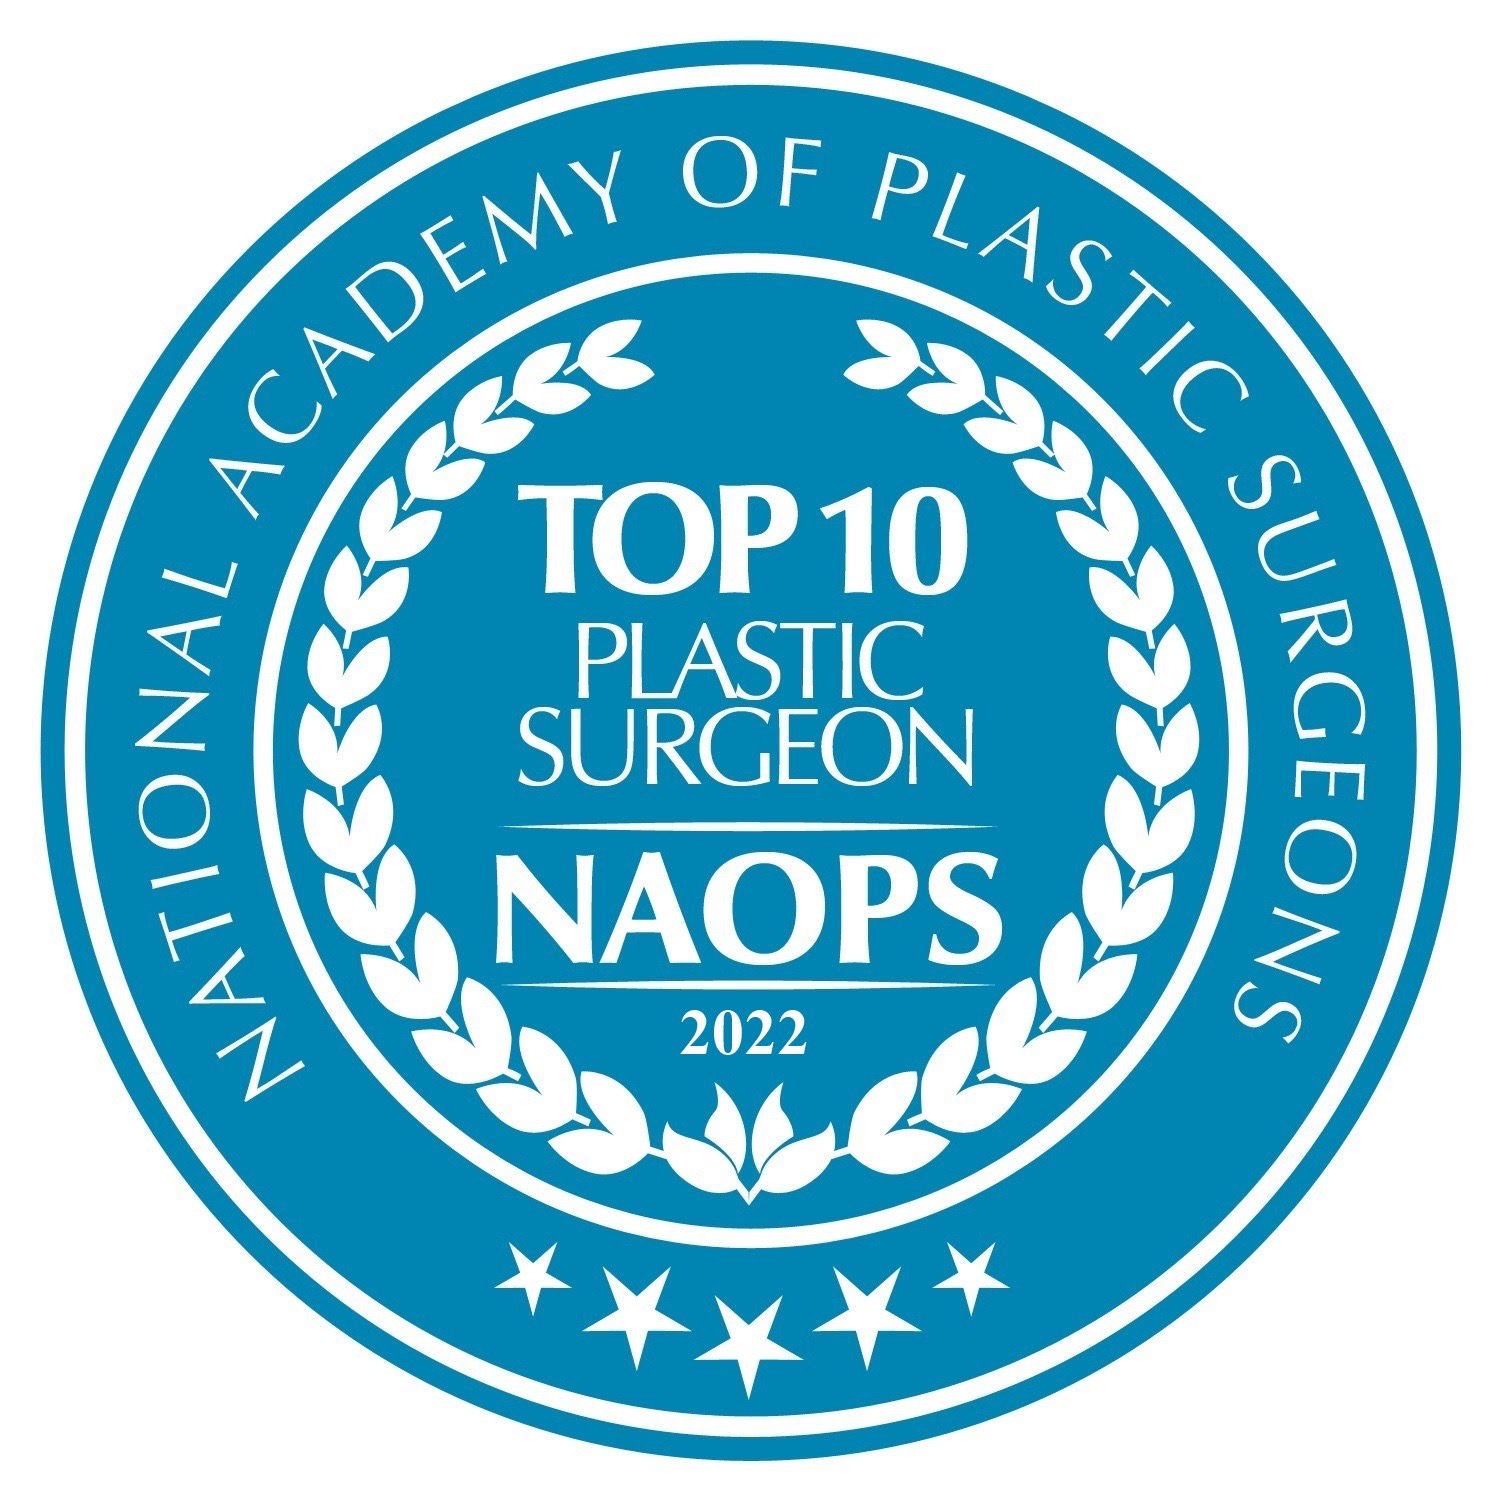 National Academy of Plastic Surgeons Top 10 Plastic Surgeon